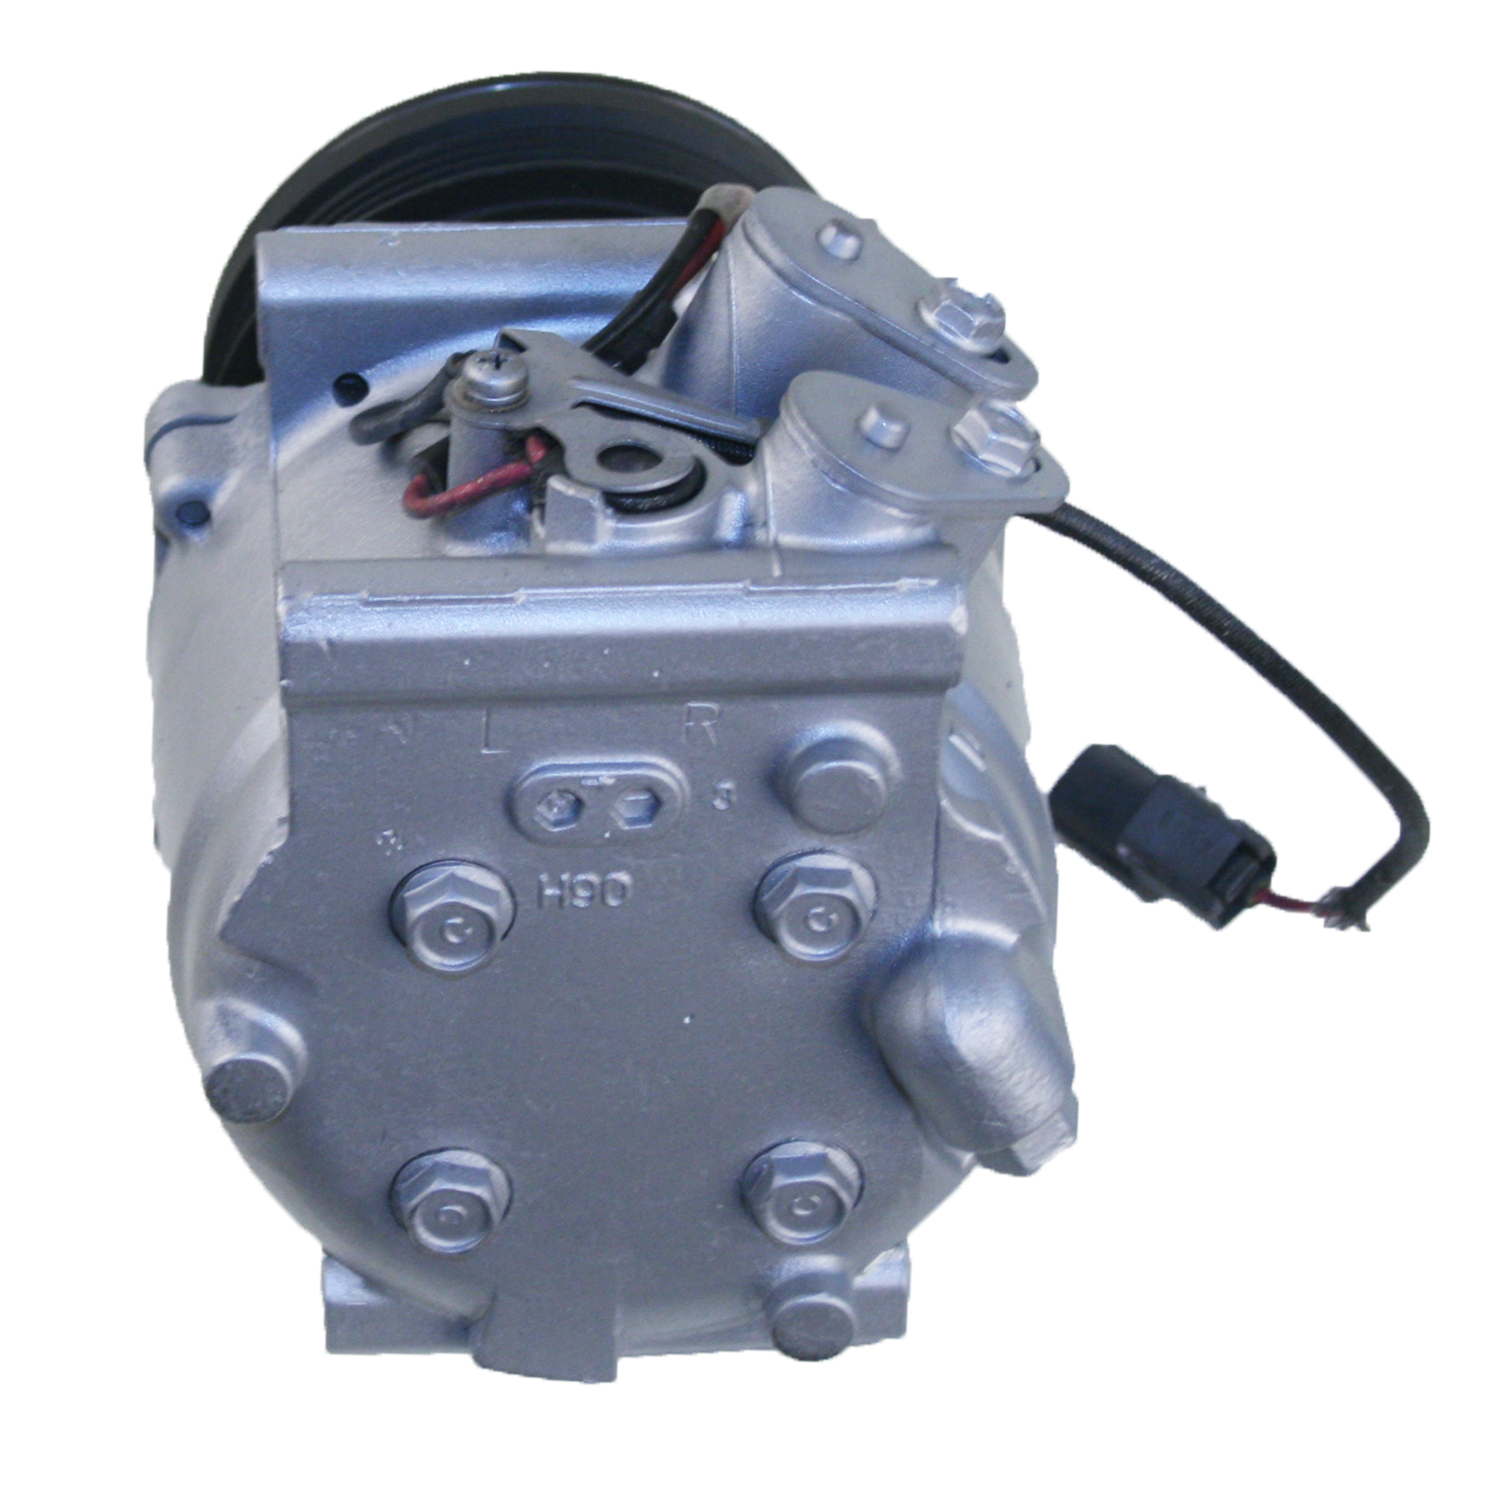 TCW Compressor 40860.401 Remanufactured Product Image field_60b6a13a6e67c